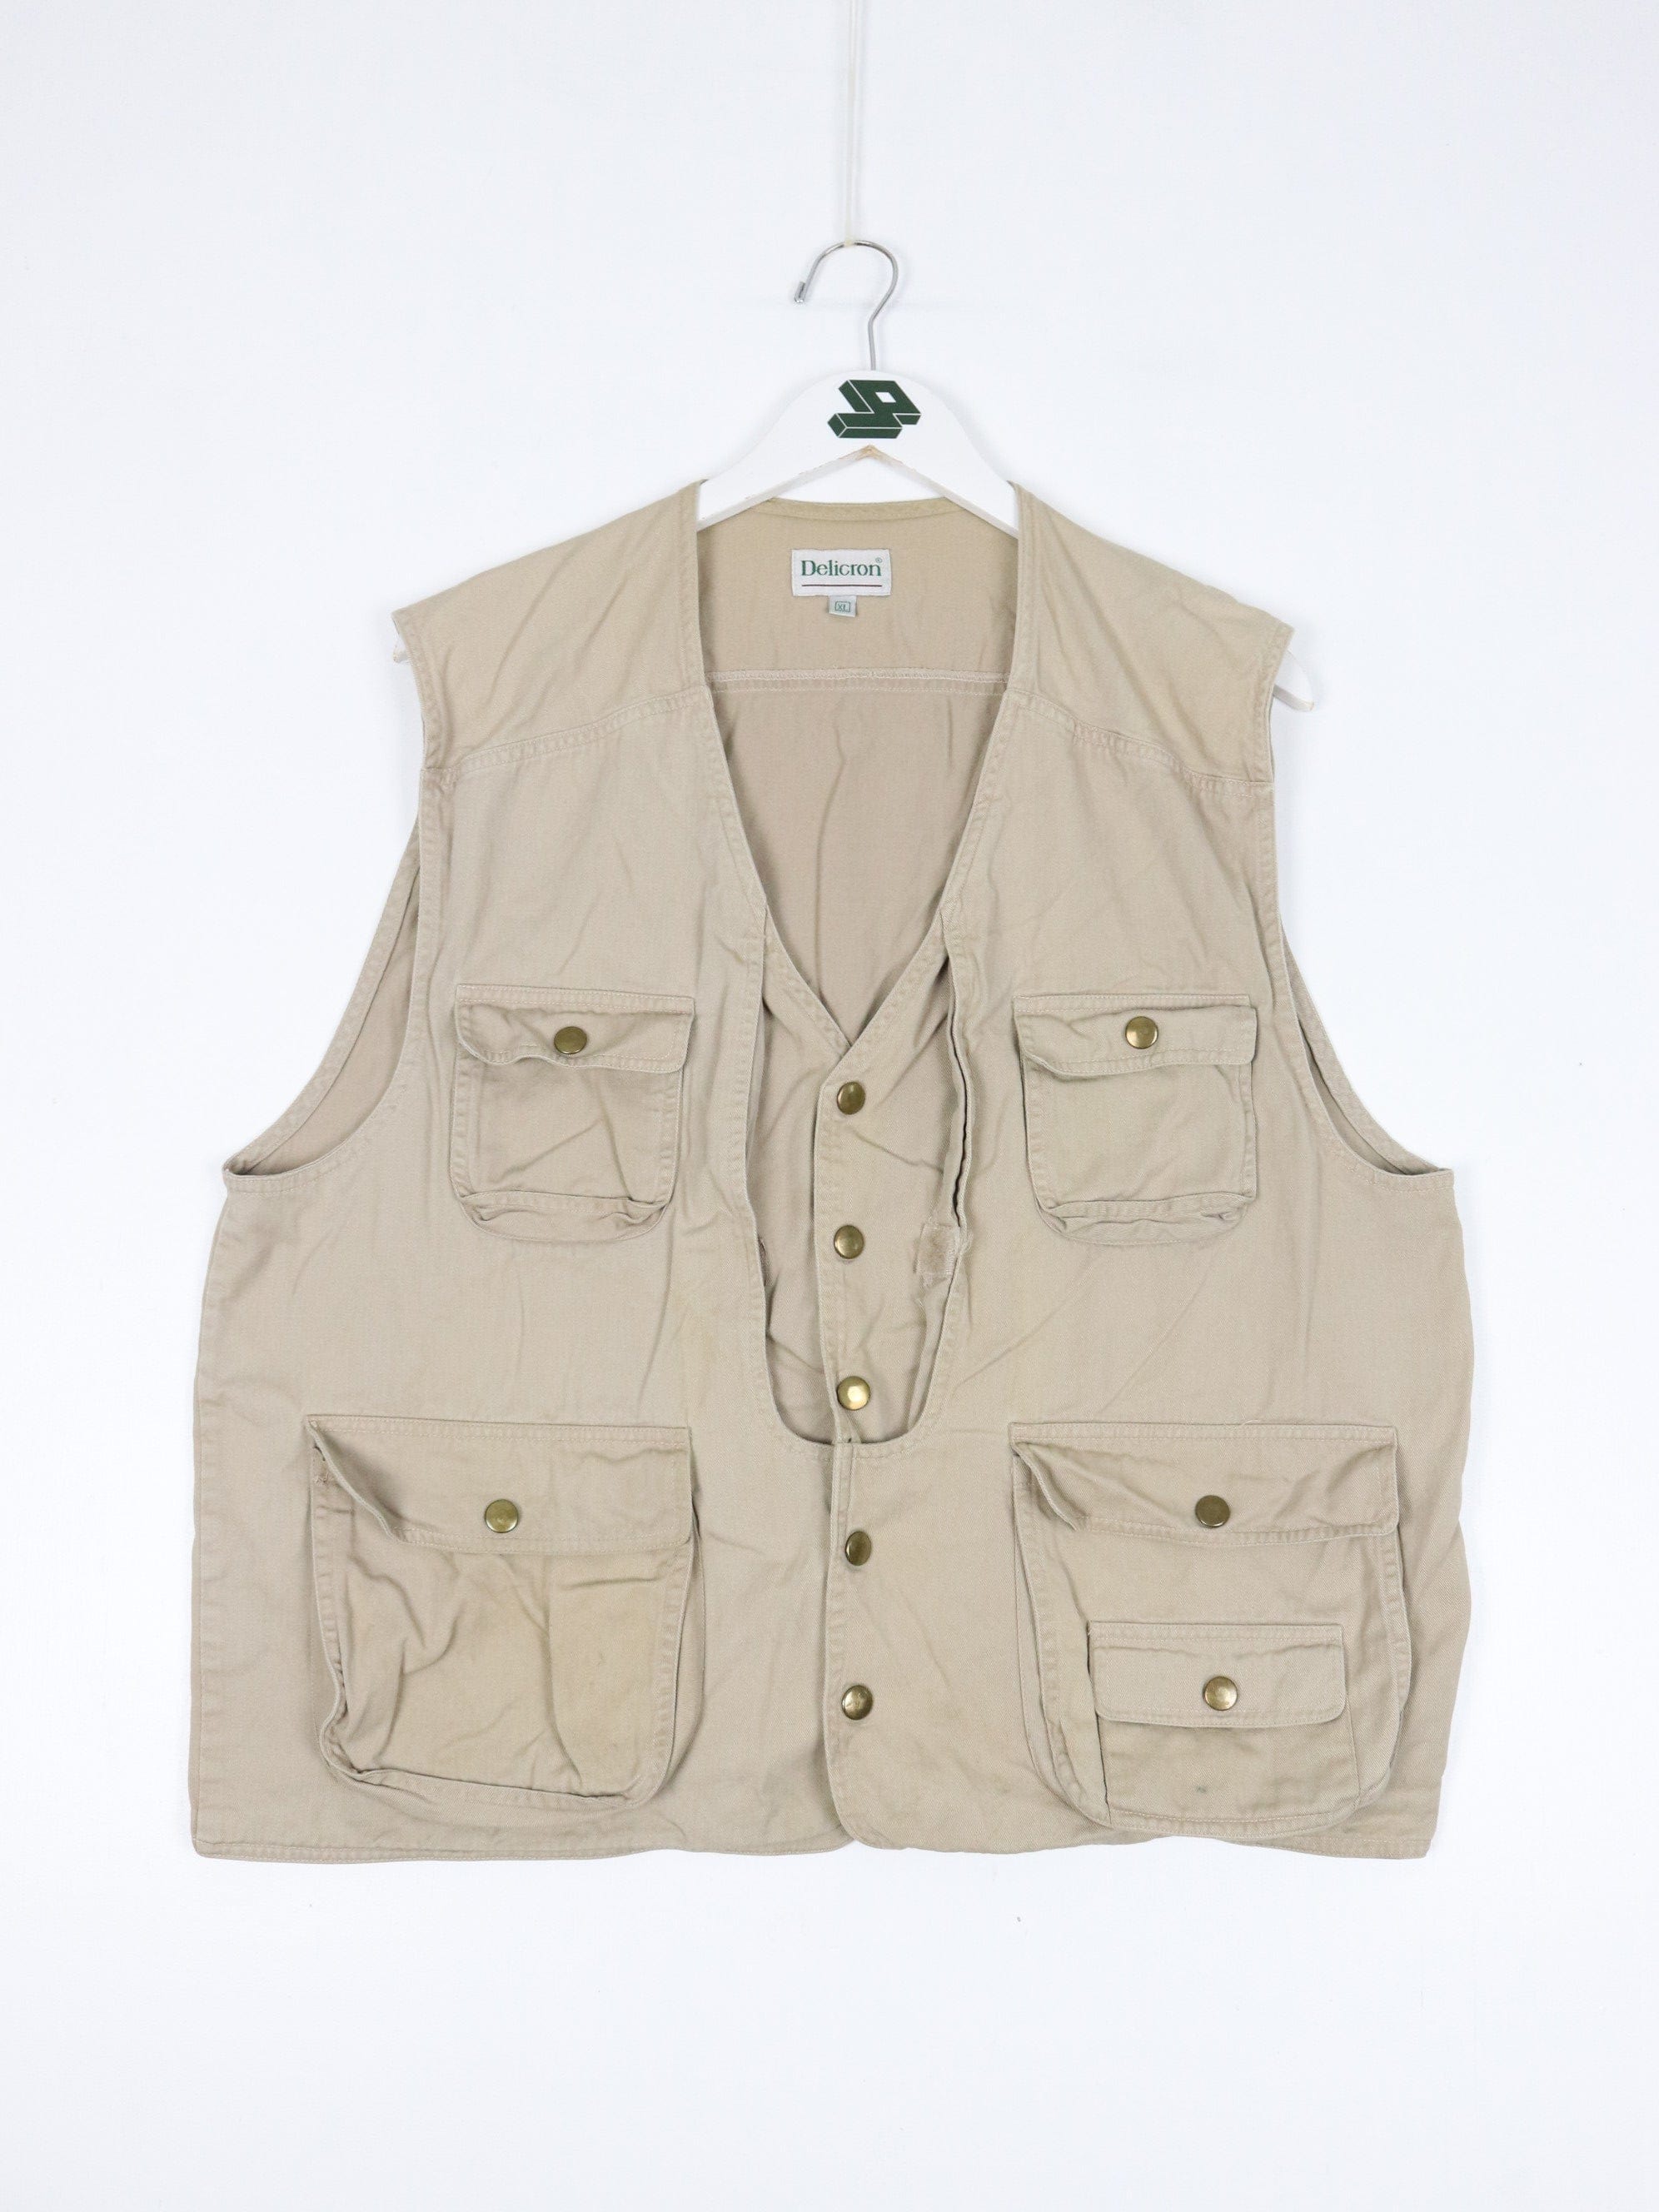 Delicron Vest Mens XL Short Brown Fishing Outdoors Jacket